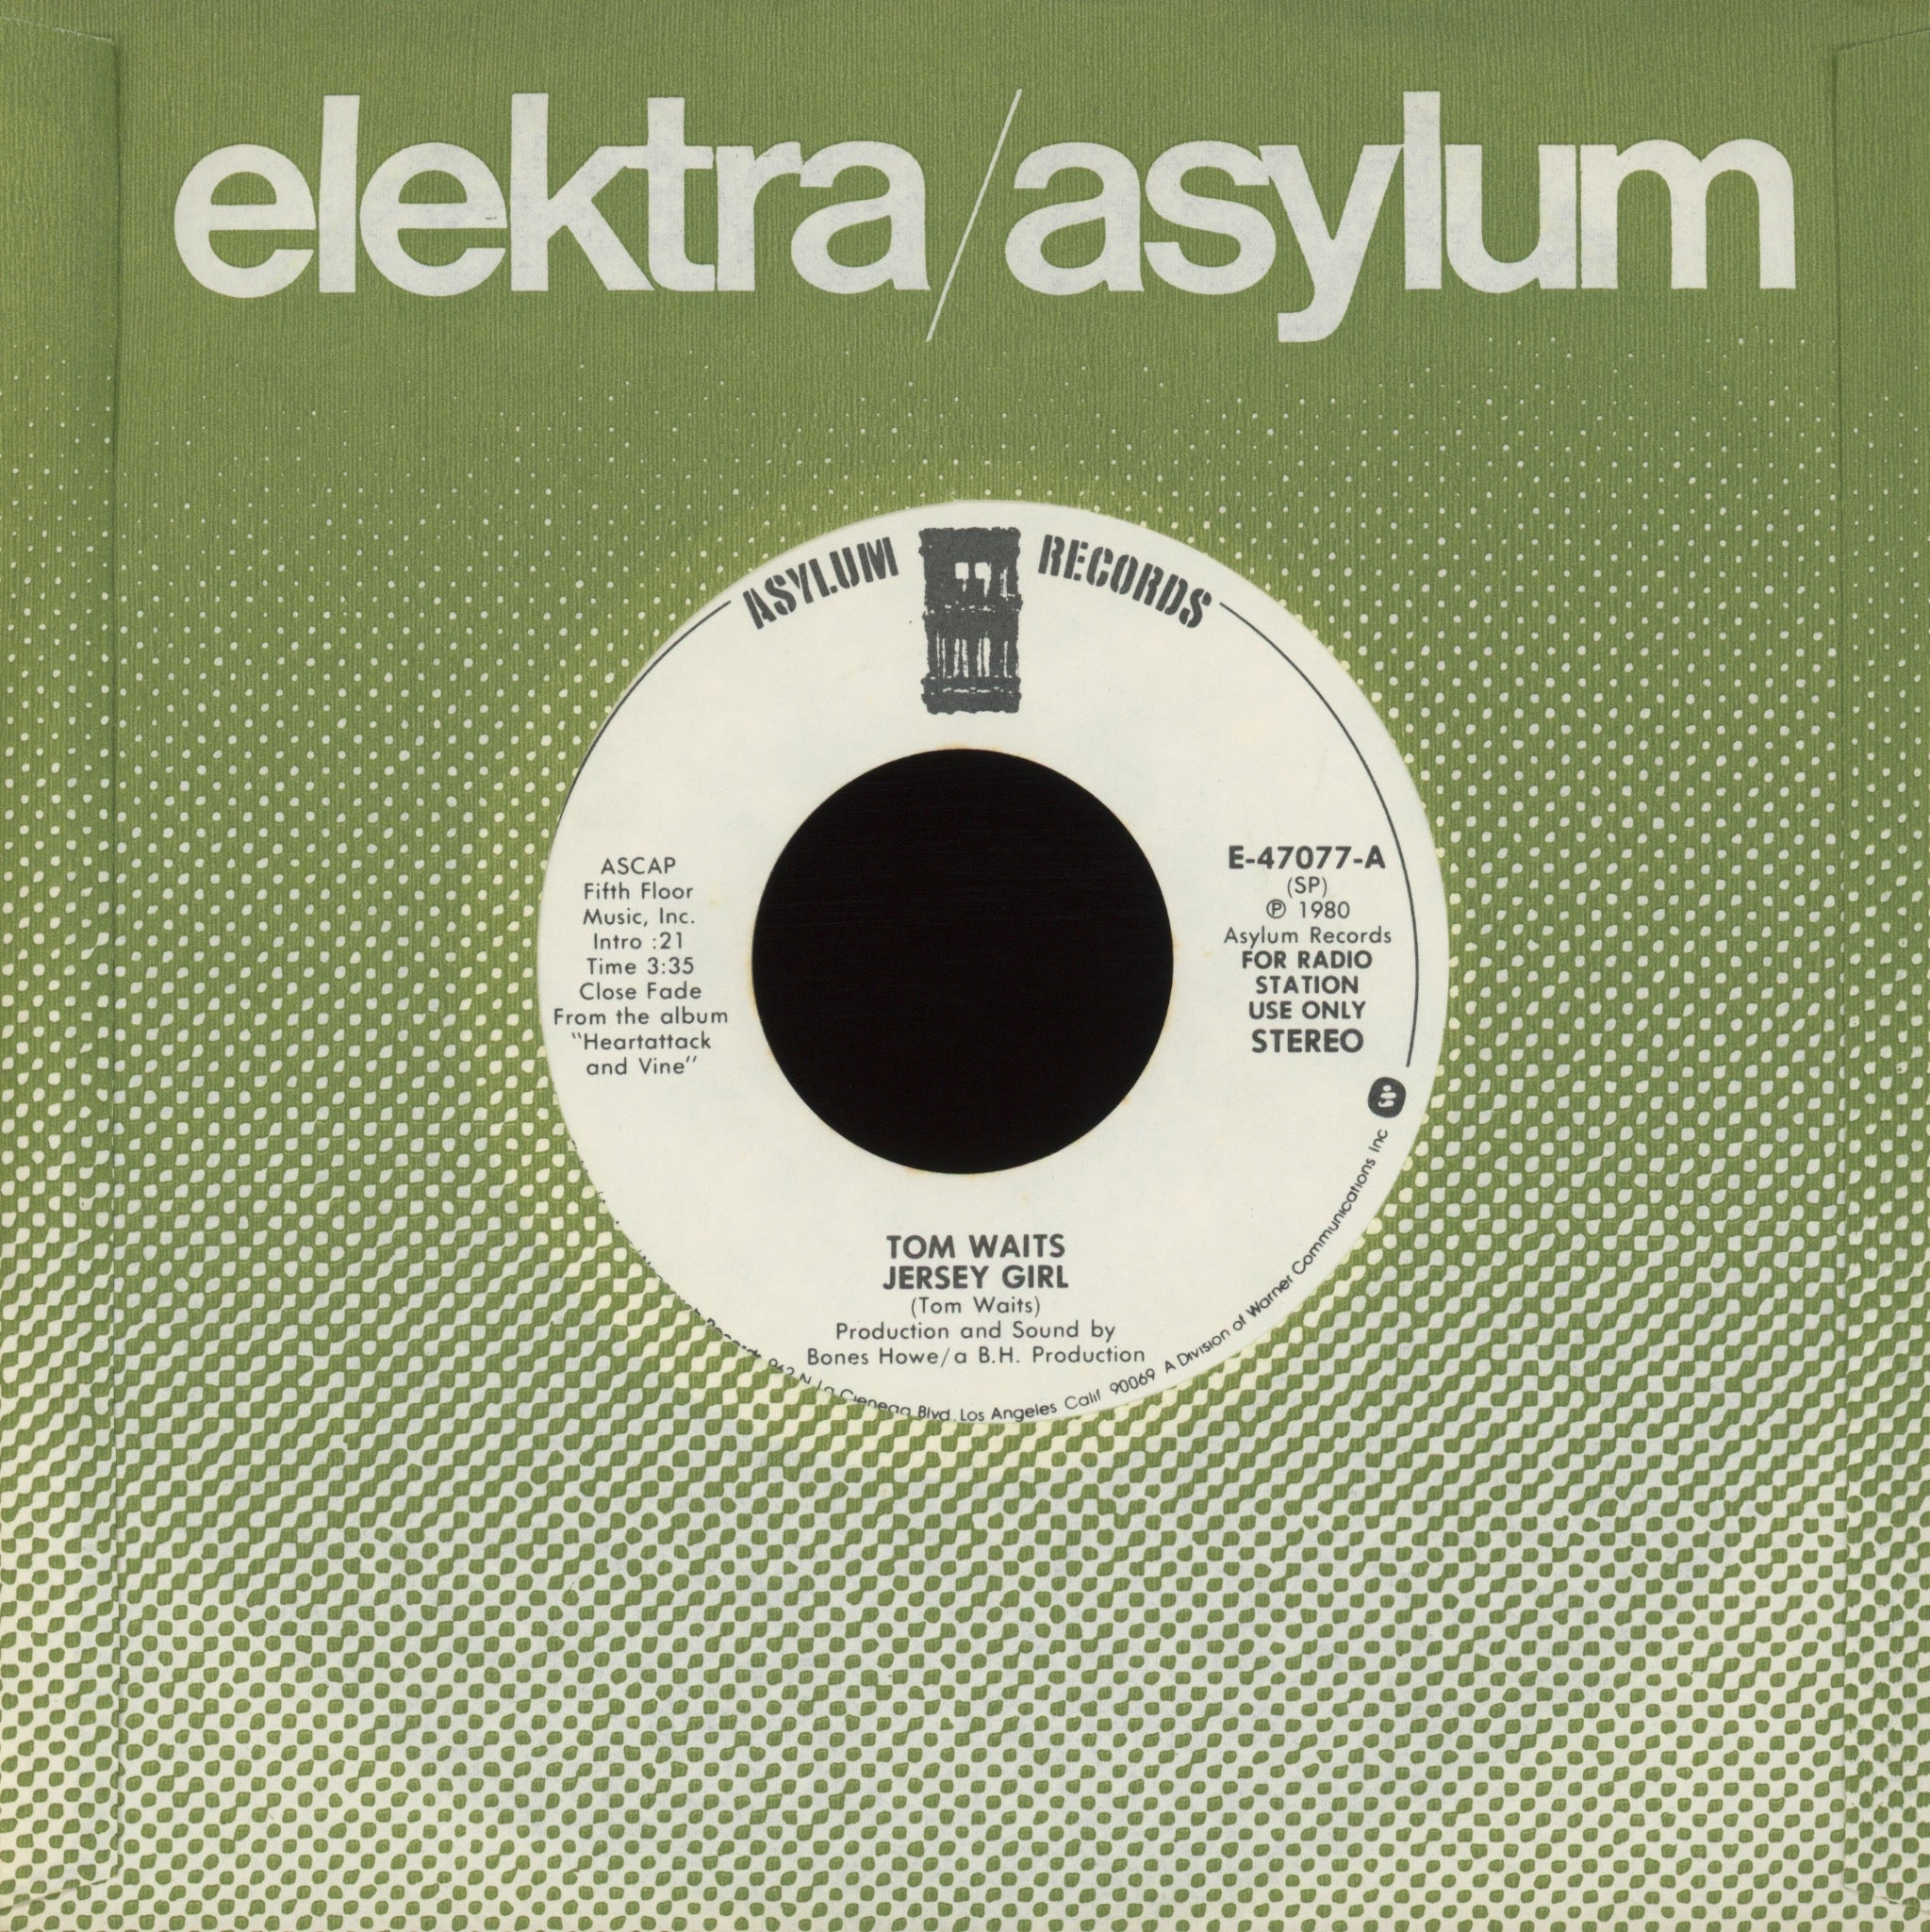 Tom Waits - Jersey Girl on Asylum Promo Rock 45